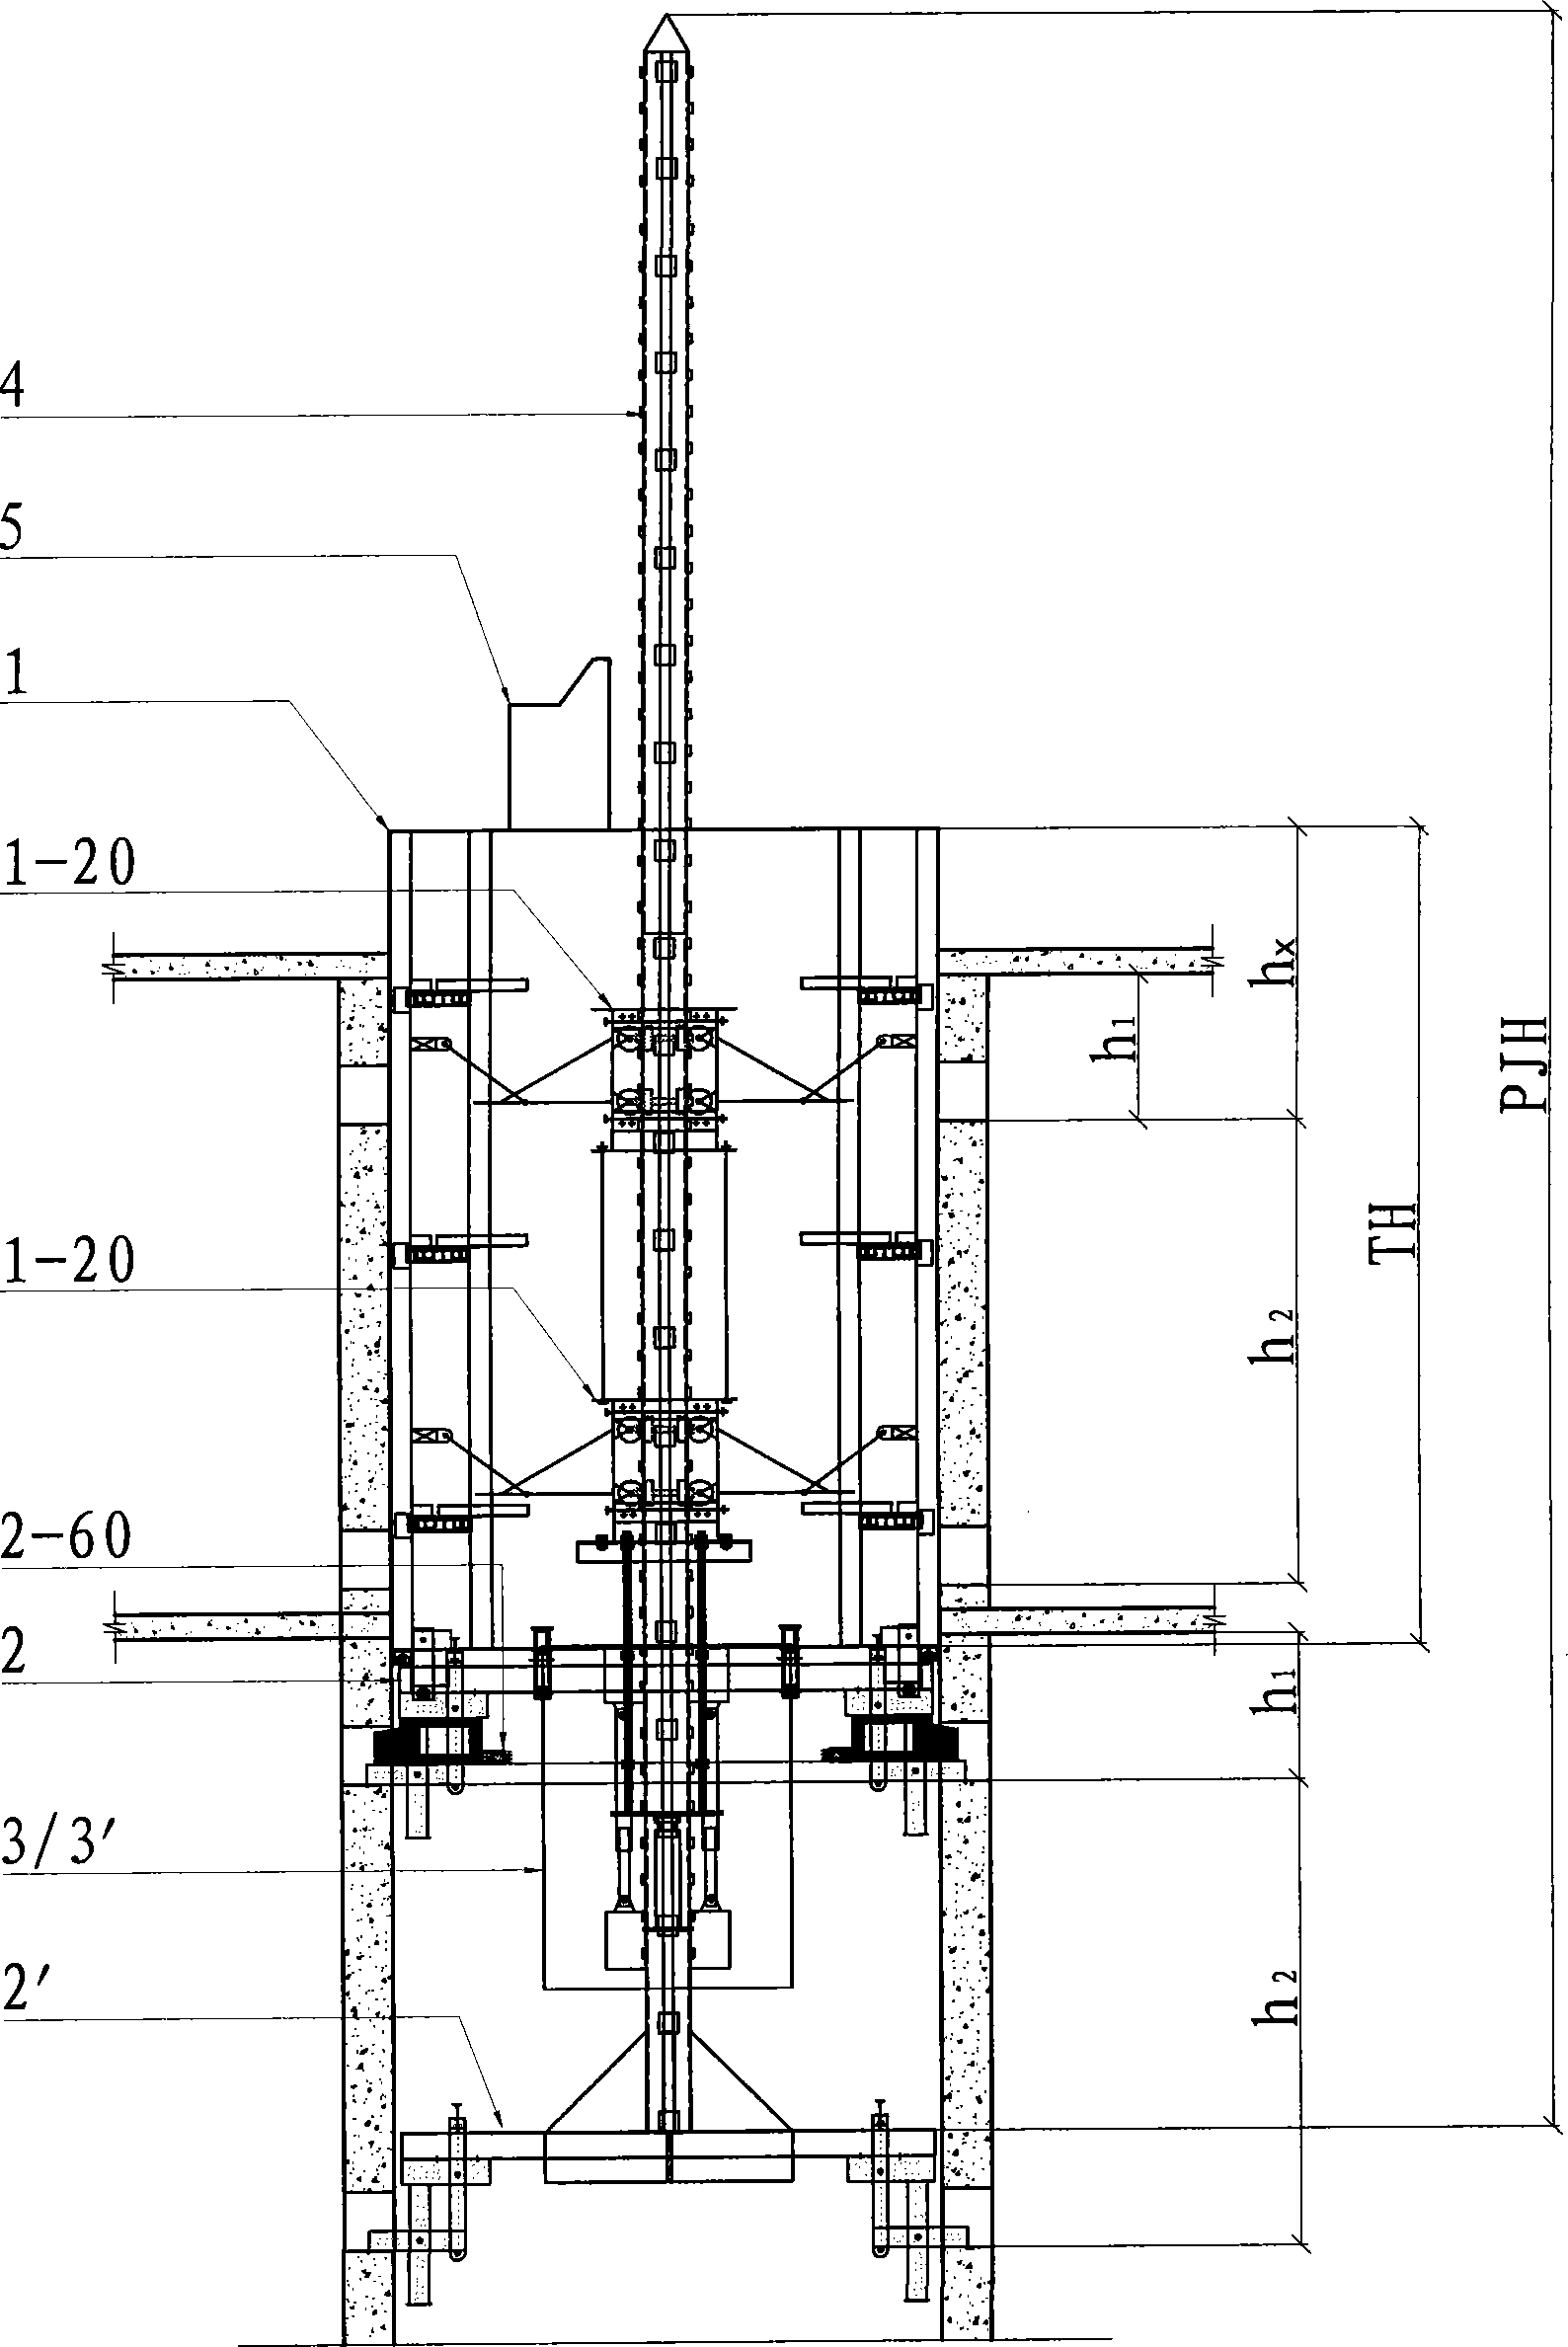 Instrumental climbing formwork for building vertical shaft/elevator shaft